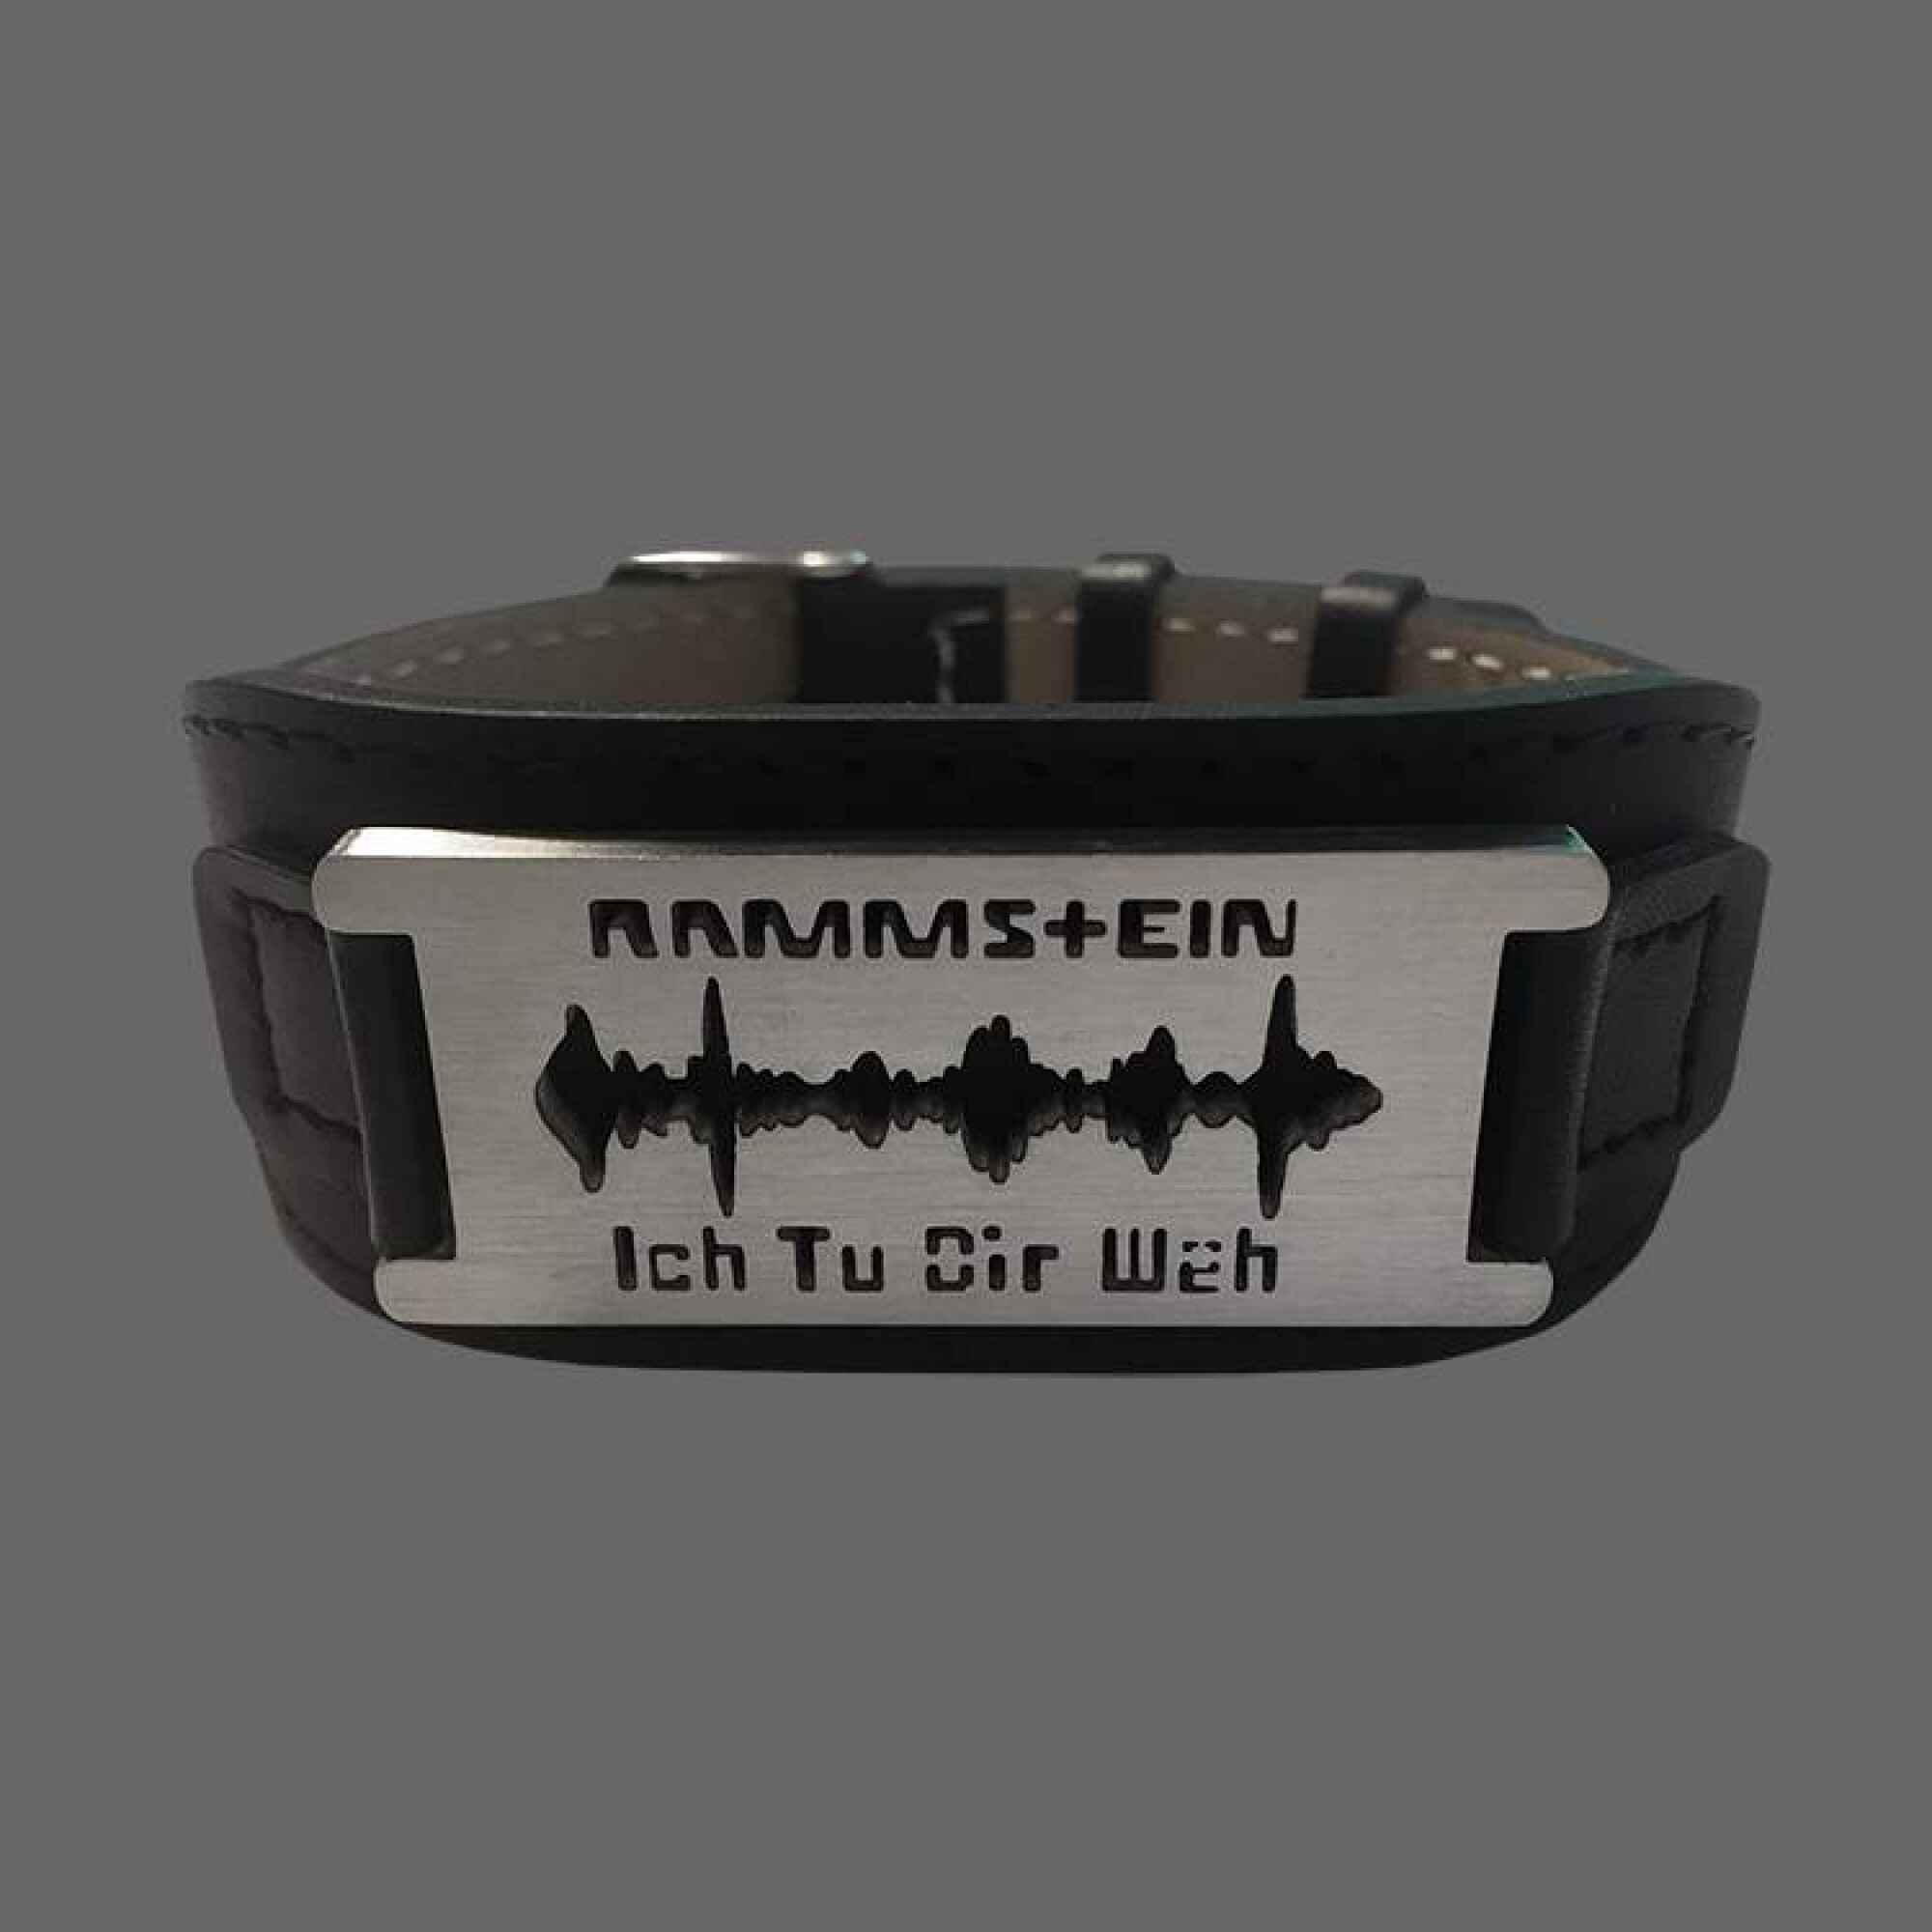 Andes uitvinding constante Leather bracelet ”Ich tu dir weh” | Rammstein-Shop